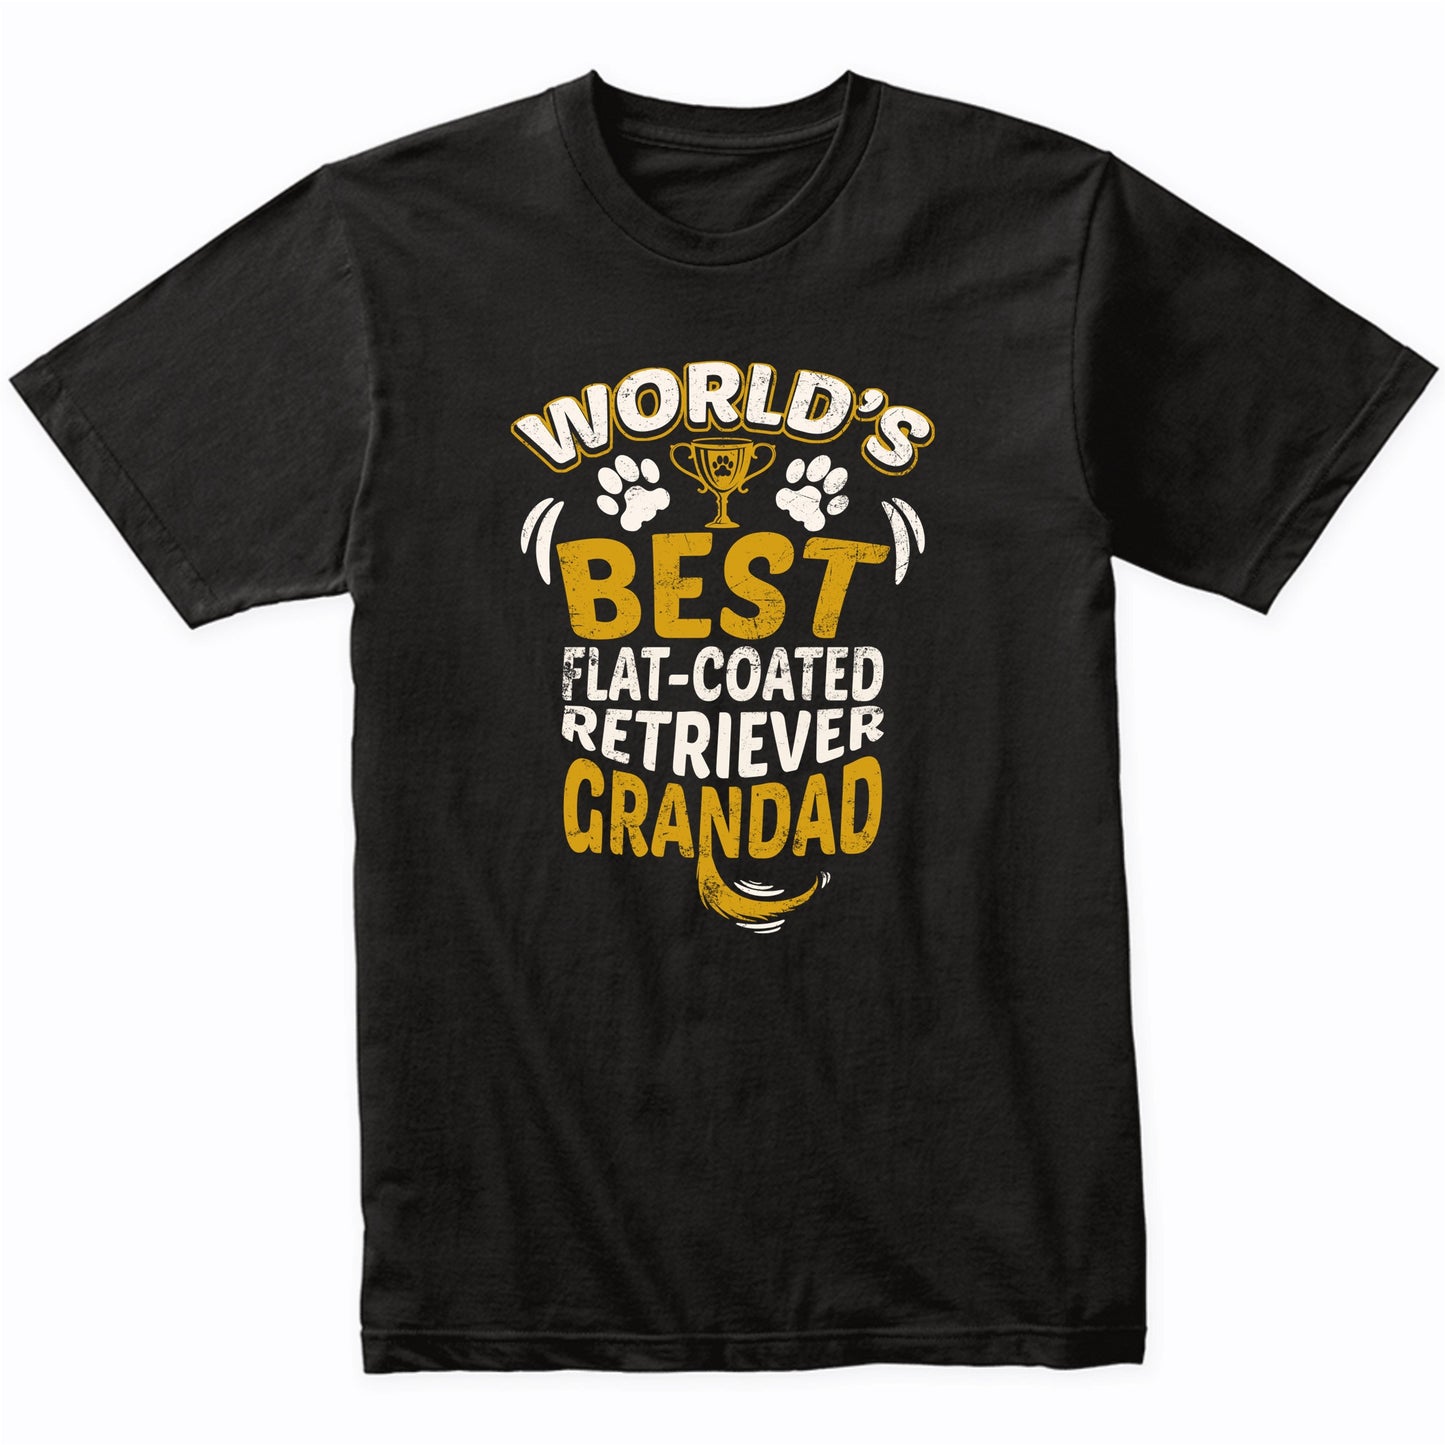 World's Best Flat-Coated Retriever Grandad Graphic T-Shirt